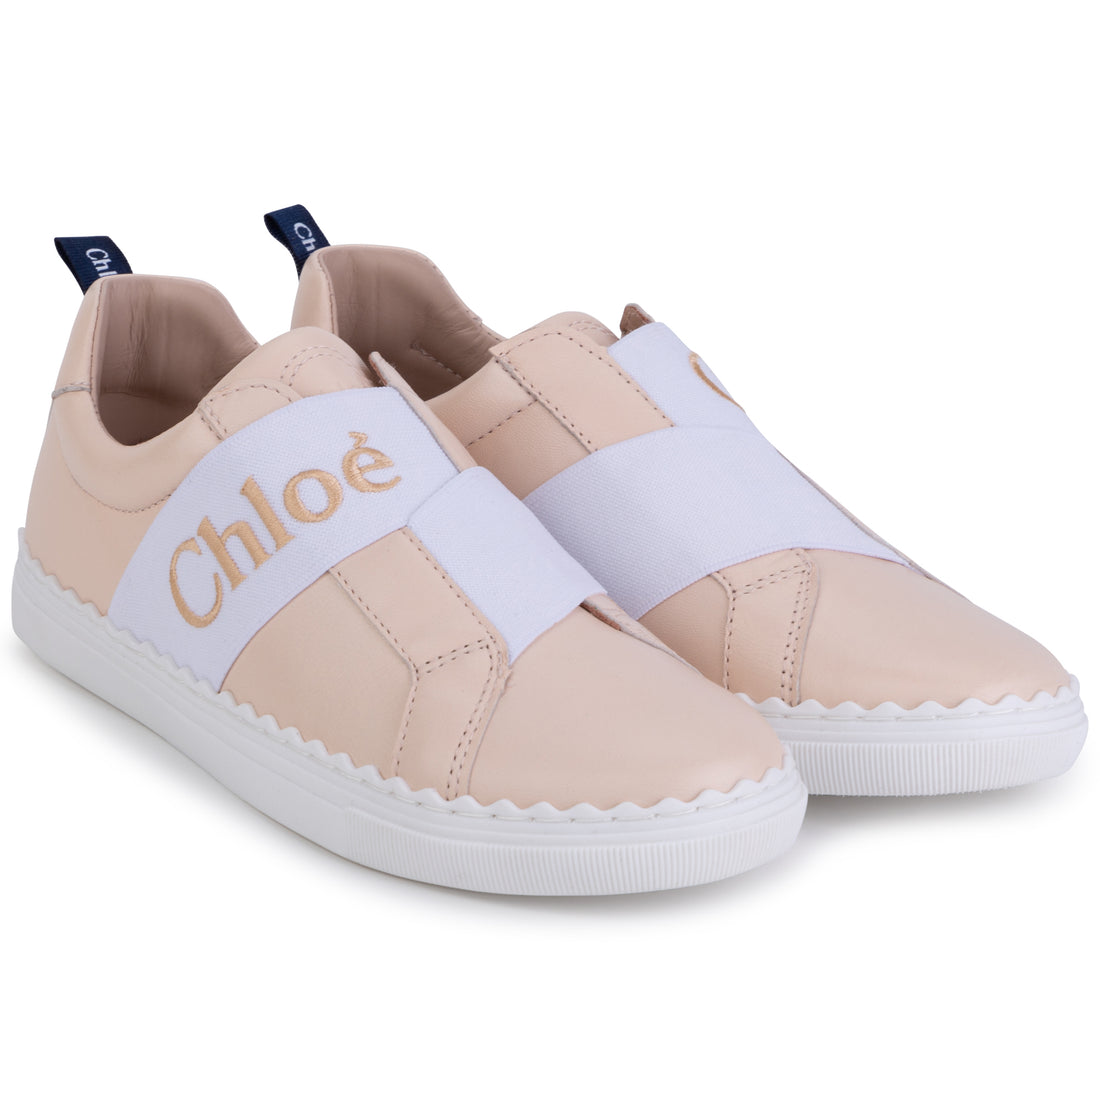 Chloe Trainers Style: C19147